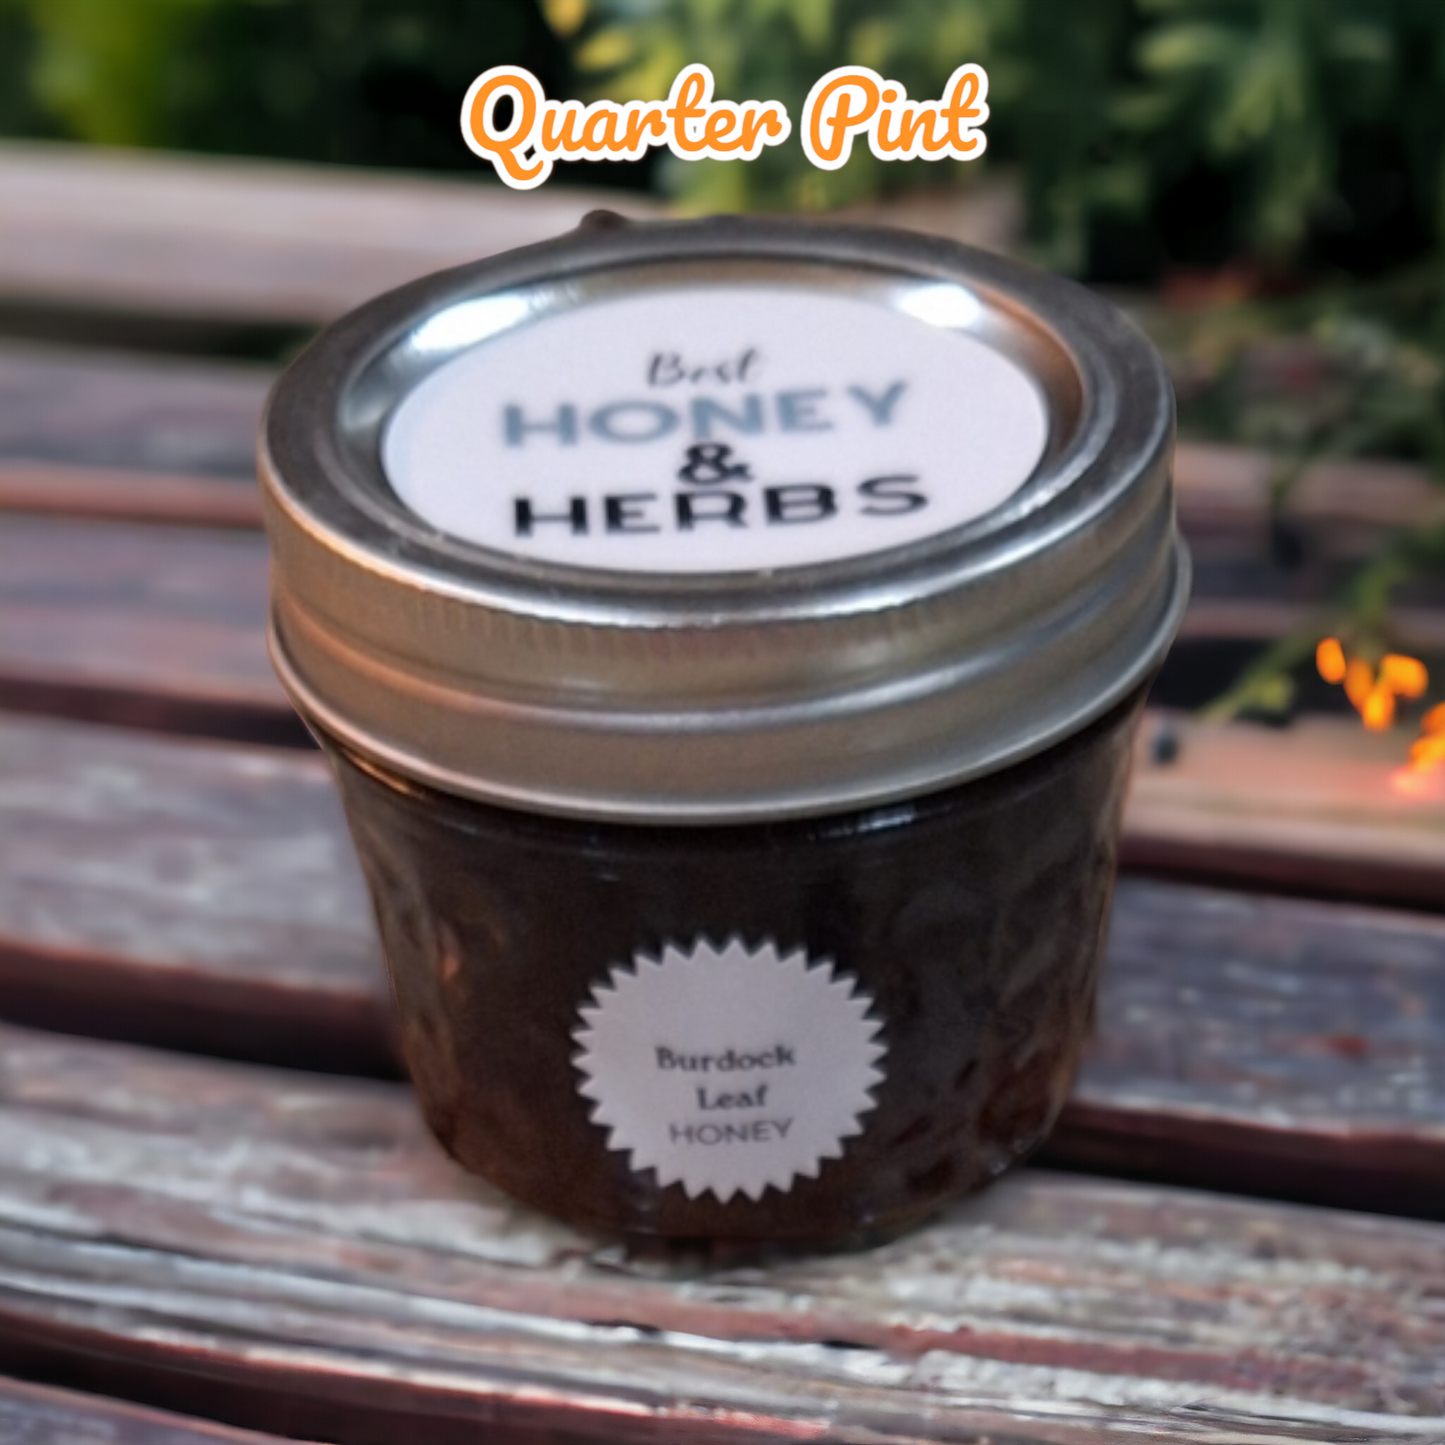 Burdock Leaf Infused Honey